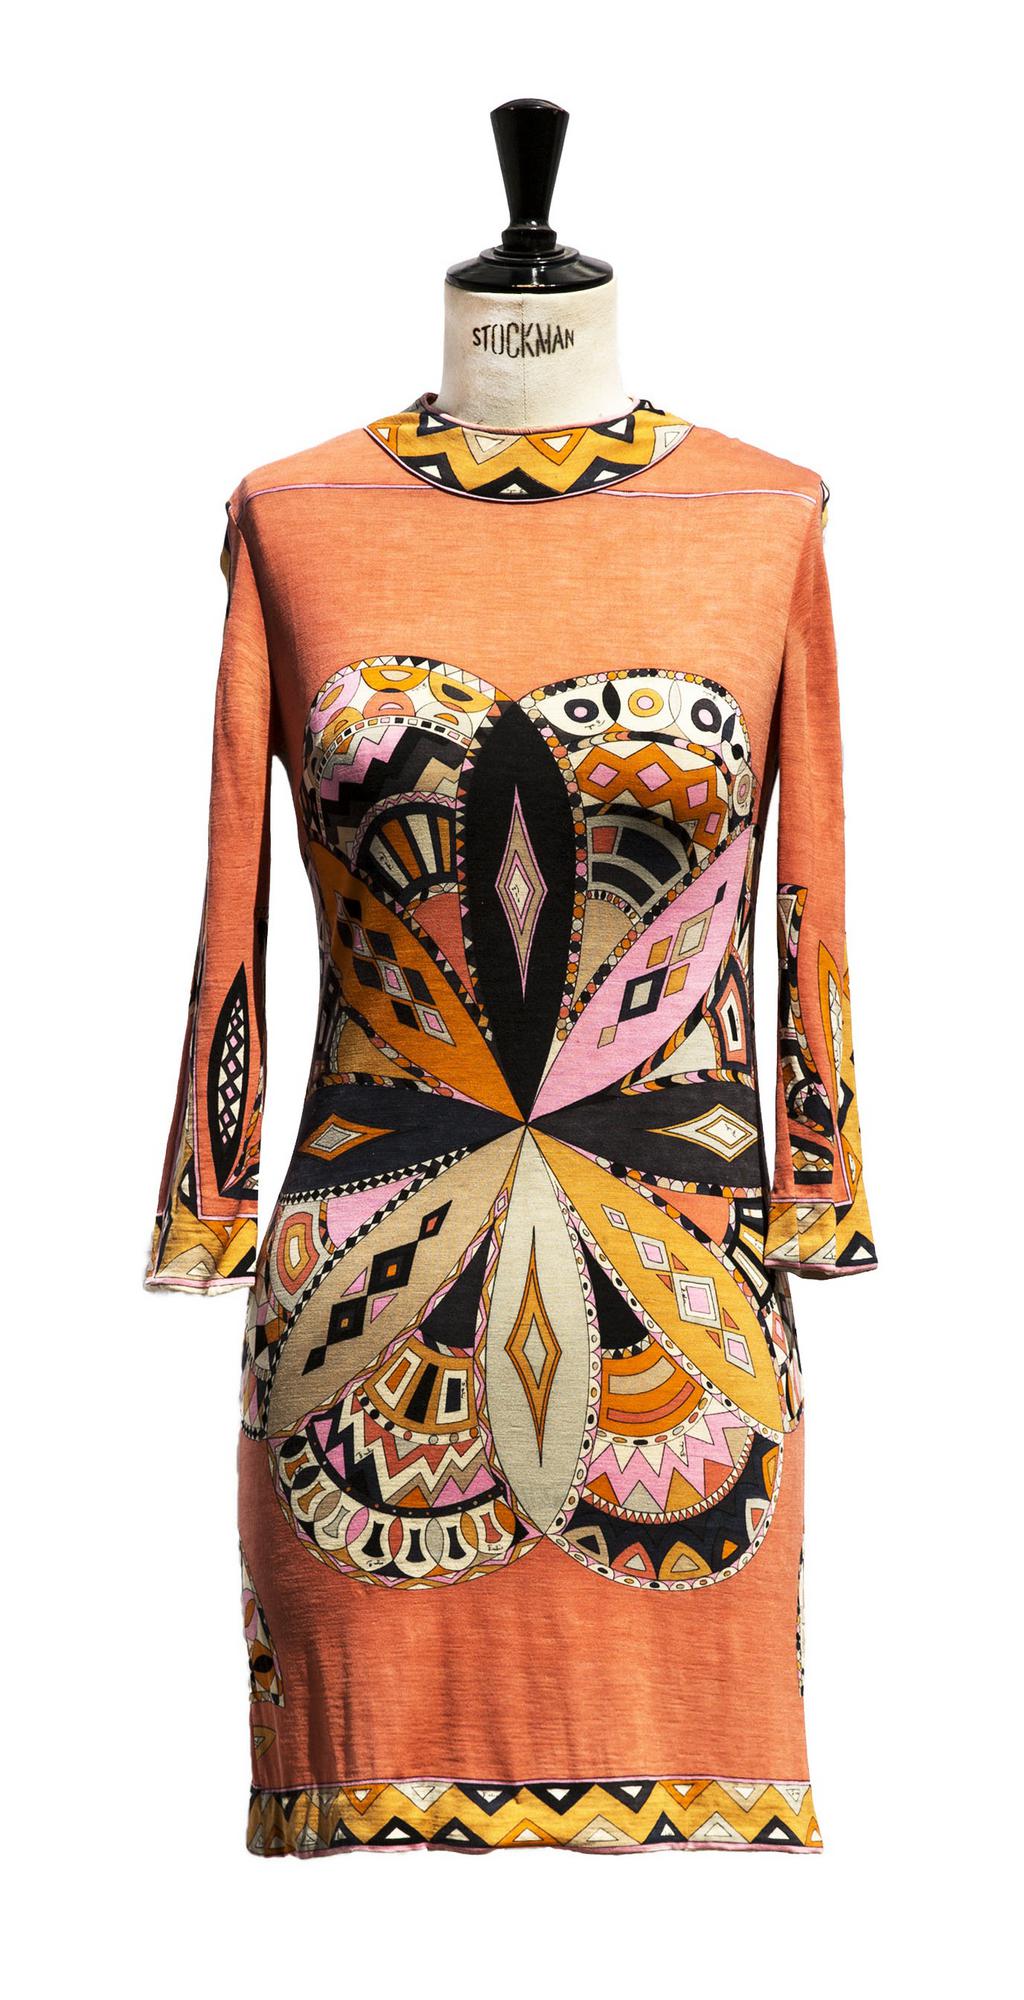 Emilio Pucci MANDALA DRESS Description: Mini dress in light wool and cashmere...